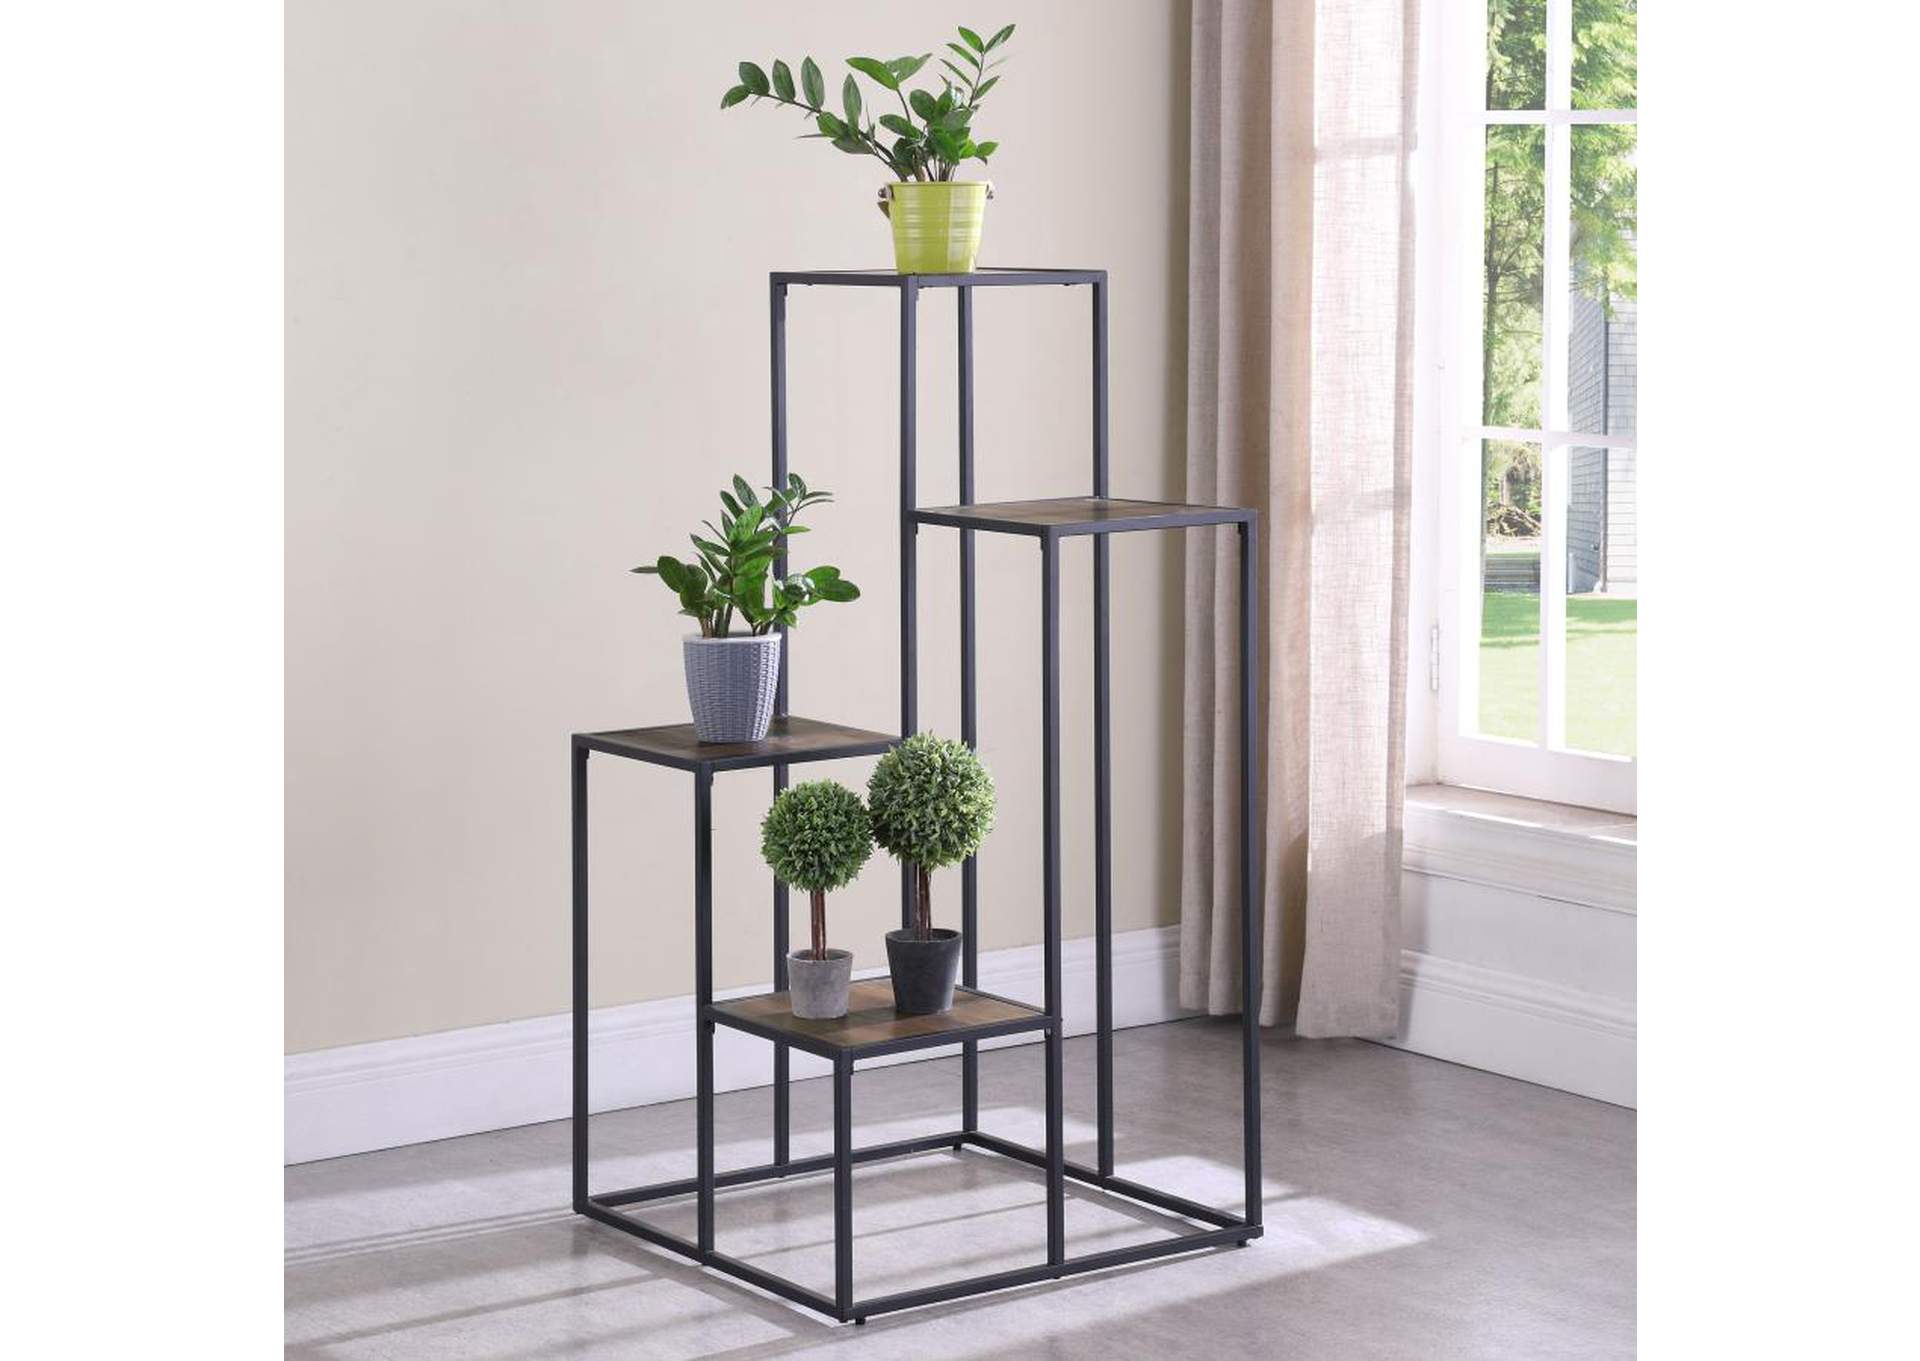 4-tier Display Shelf Rustic Brown and Black,Coaster Furniture